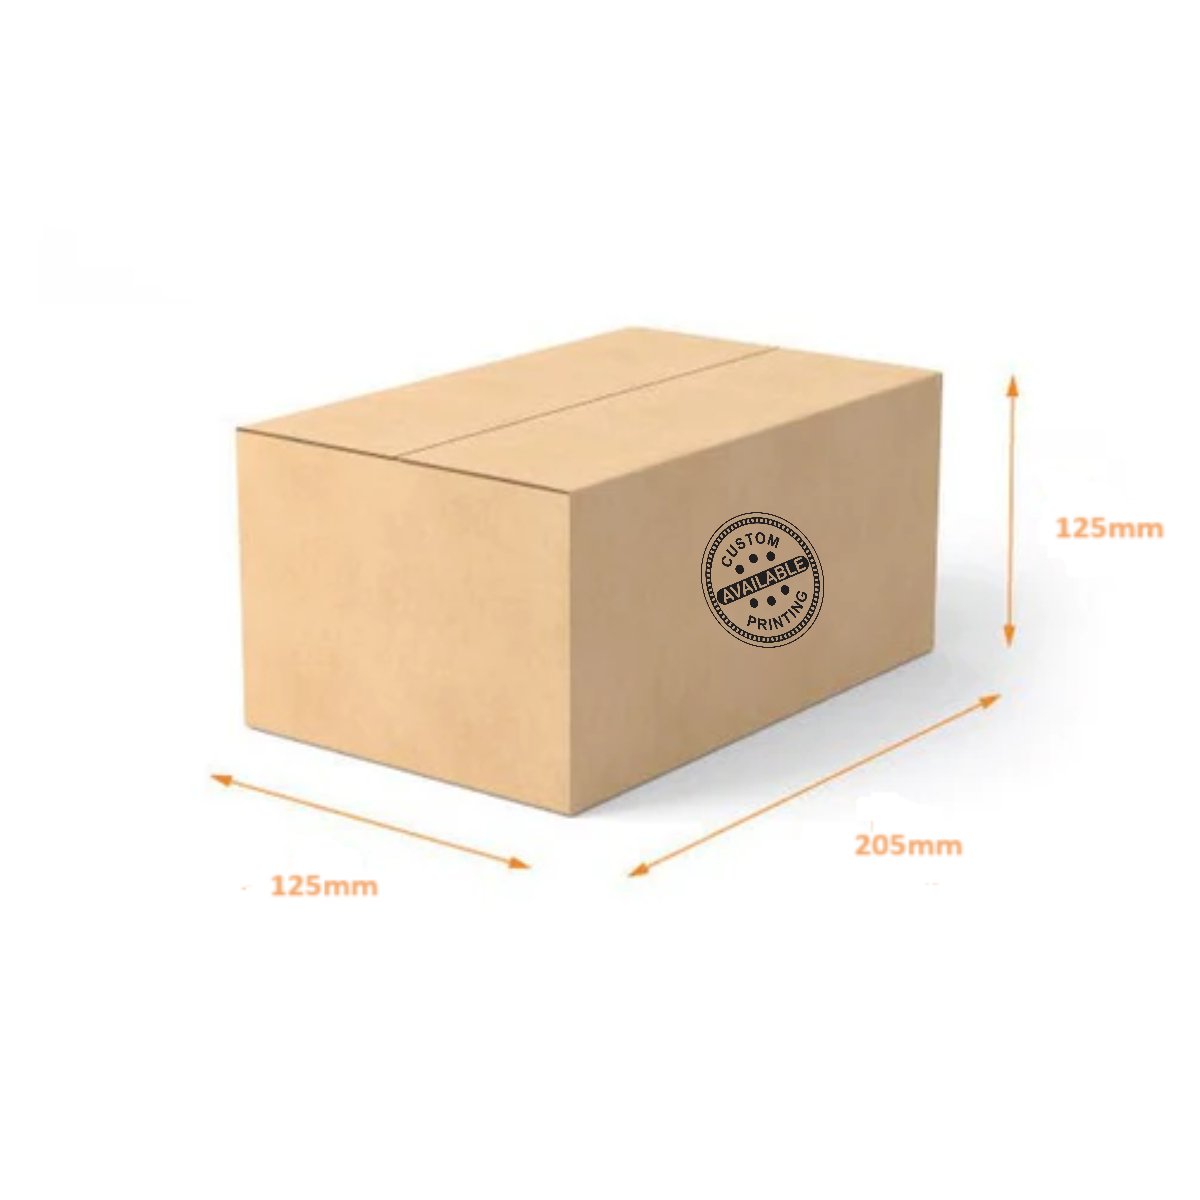 RSC Shipping Carton 339729 - 100% Recyclable - PackQueen